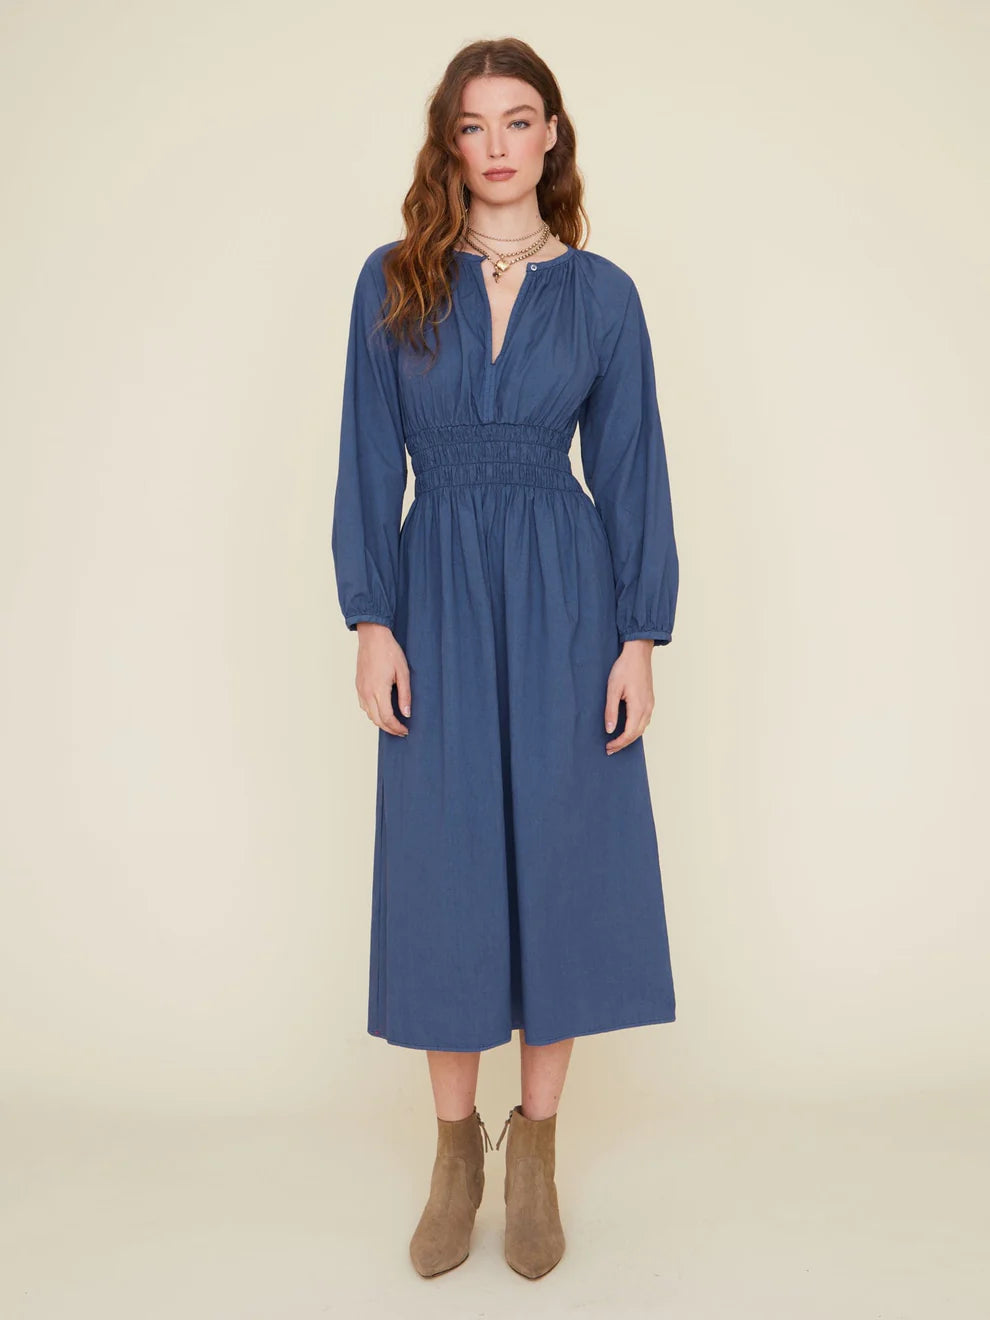 Xirena - Delft Blue Simone Dress